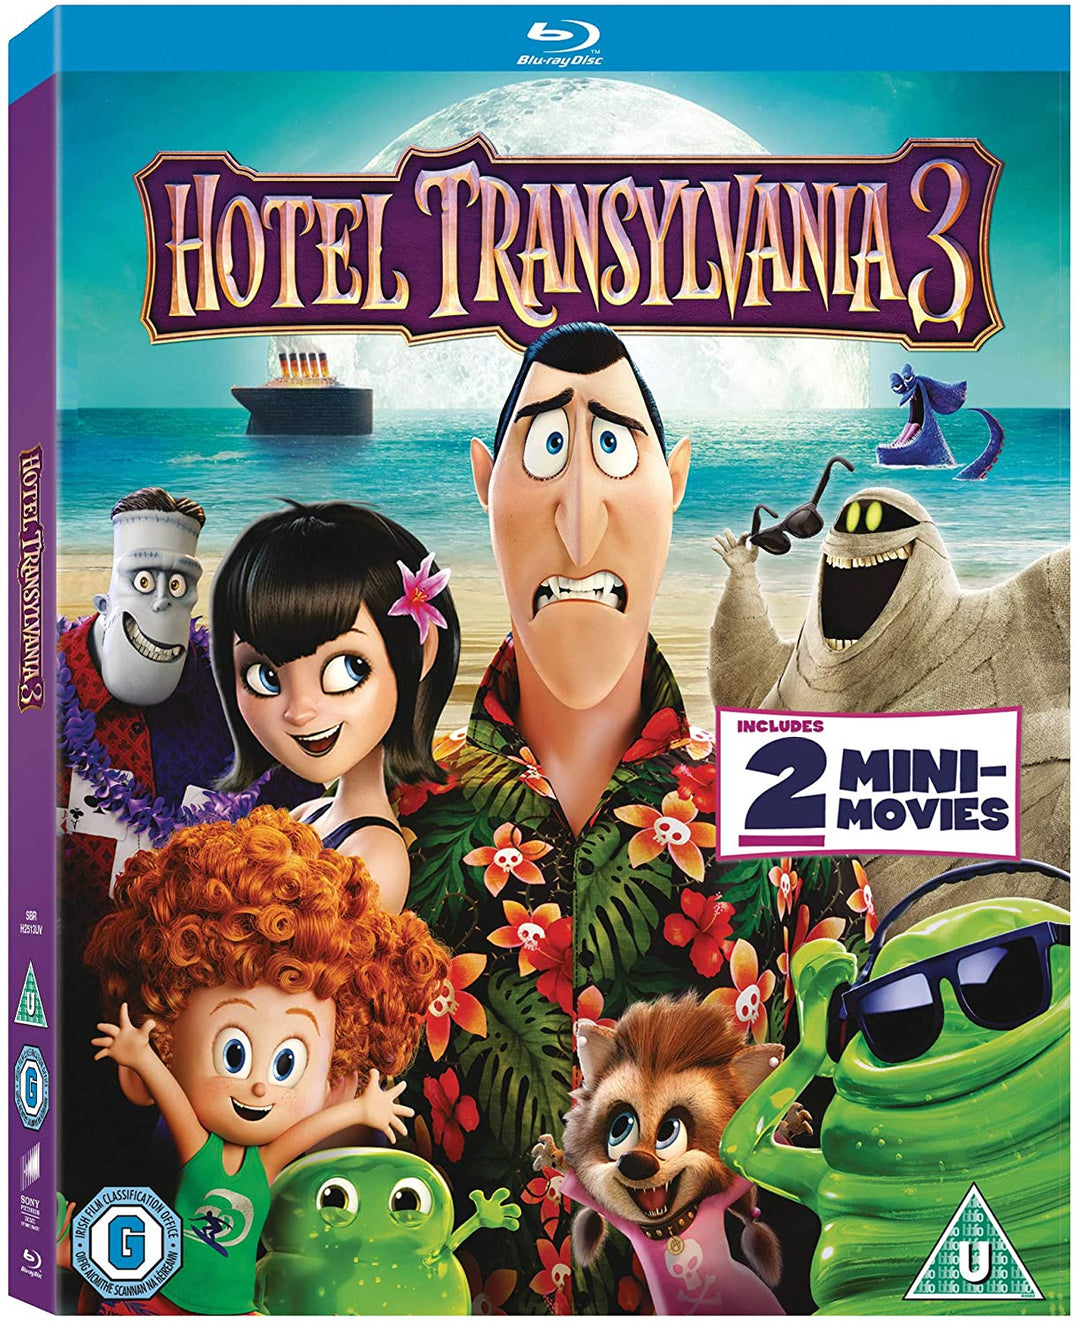 Hotel Transylvania 3 - Comedy/Family [Blu-ray]